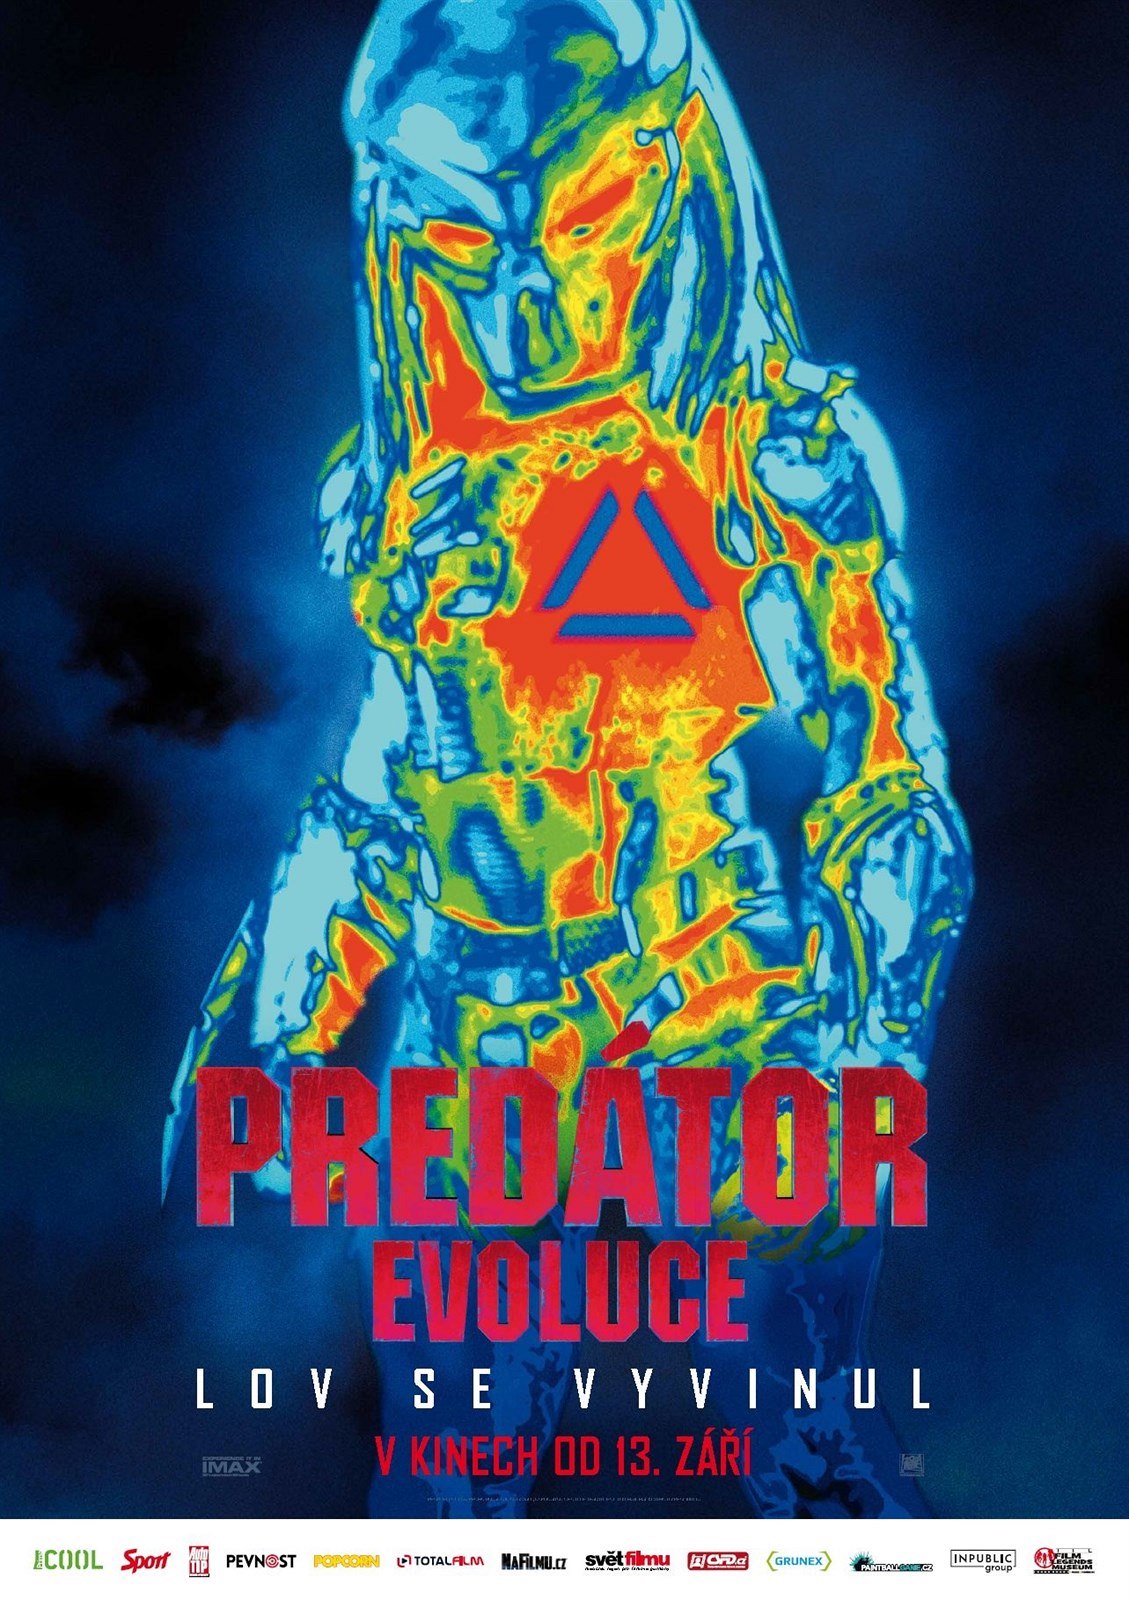 Stiahni si Filmy CZ/SK dabing Predator: Evoluce / The Predator (2018)(CZ) = CSFD 53%